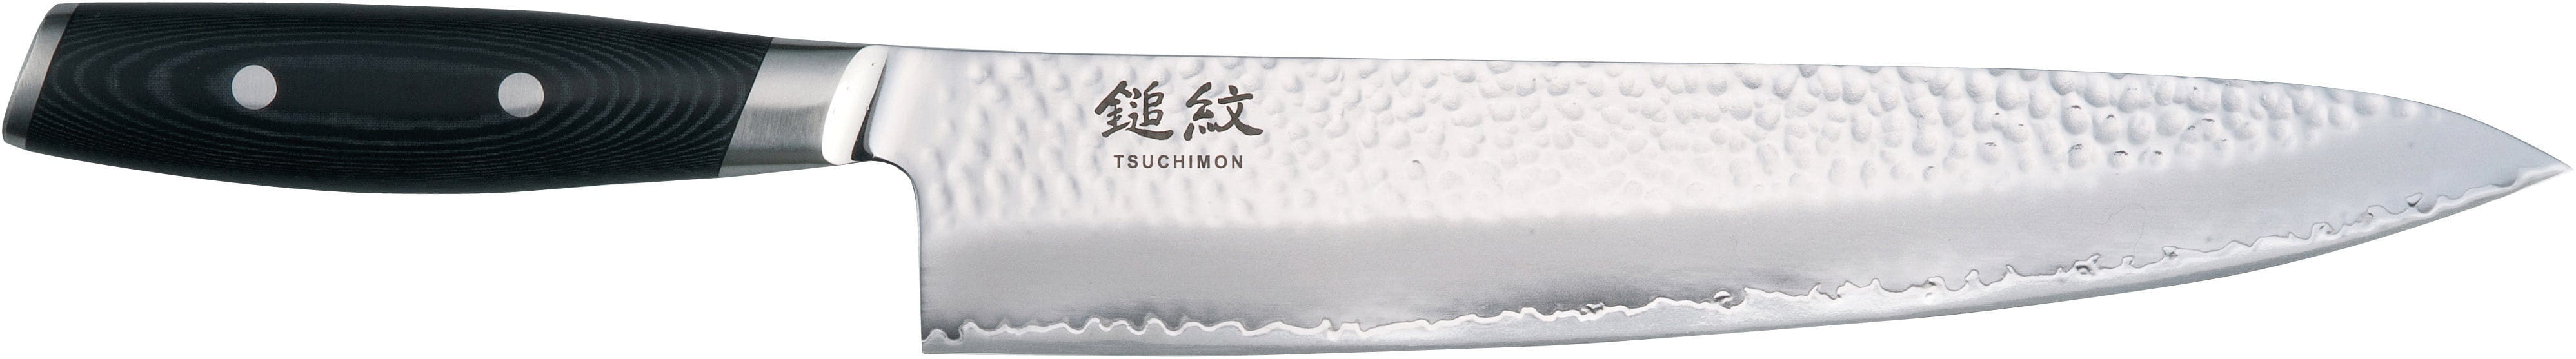 Yaxell Tsuchimon kokkur hníf, 25,5 cm